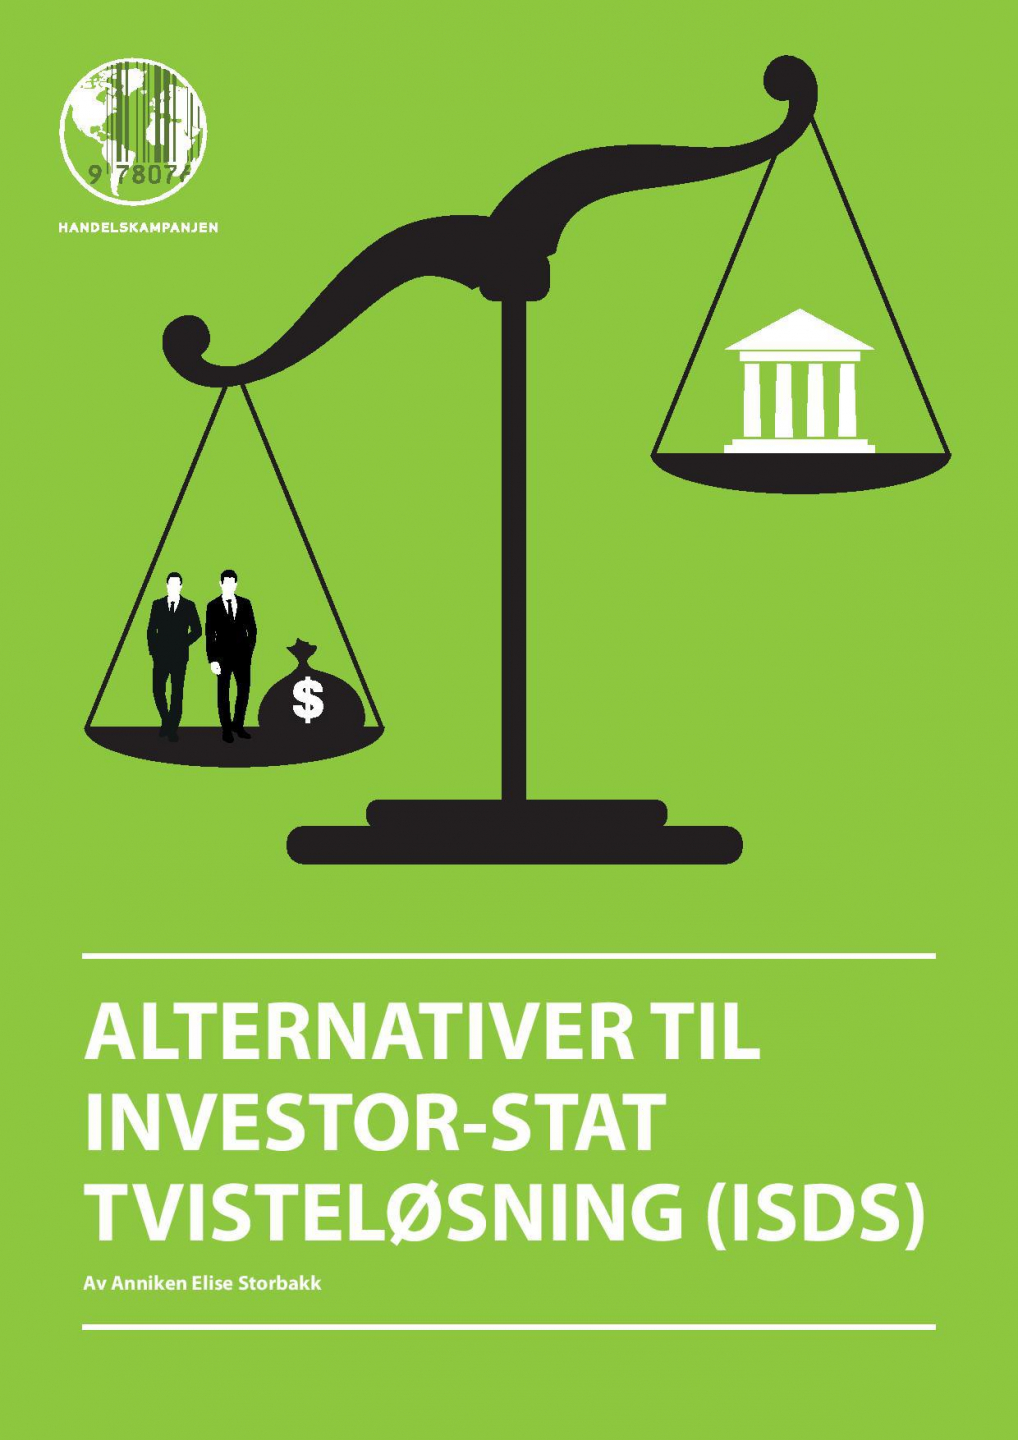 Alternativer til investor-stat tvisteløsning (ISDS)